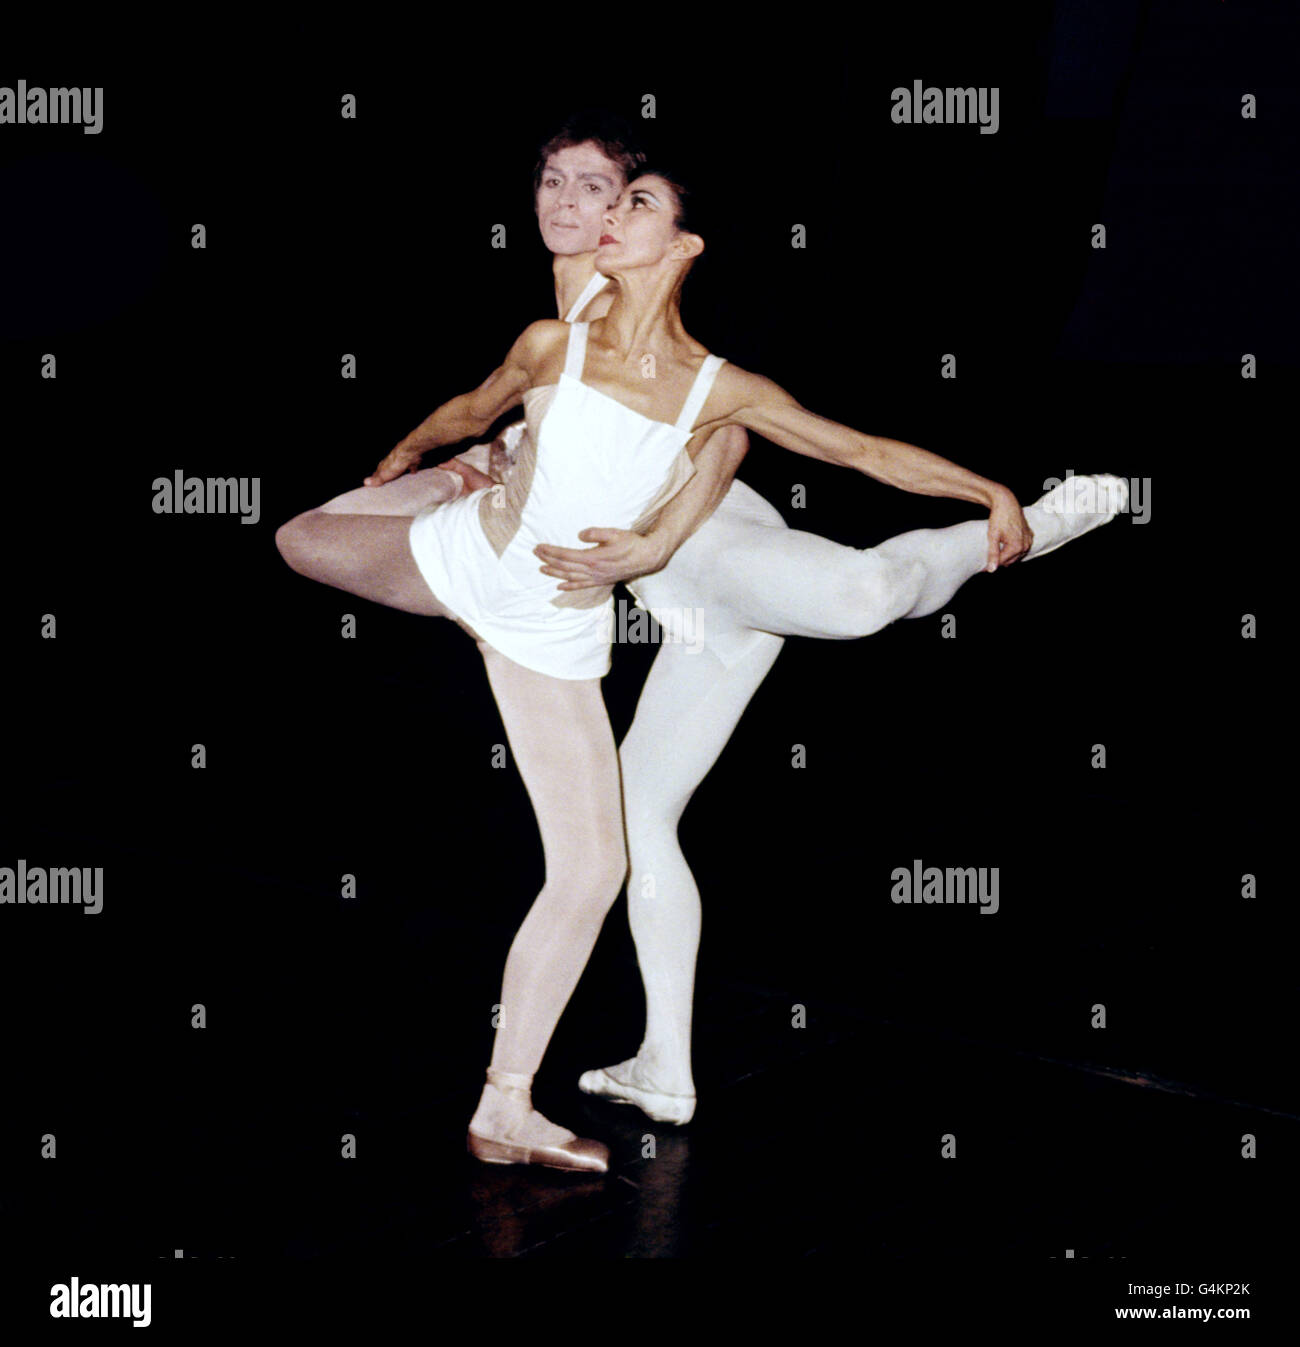 Balletto - 'Paradiso perduto' prova - Margot Fonteyn e Rudolf Nureyev -  Covent Garden, Londra Foto stock - Alamy